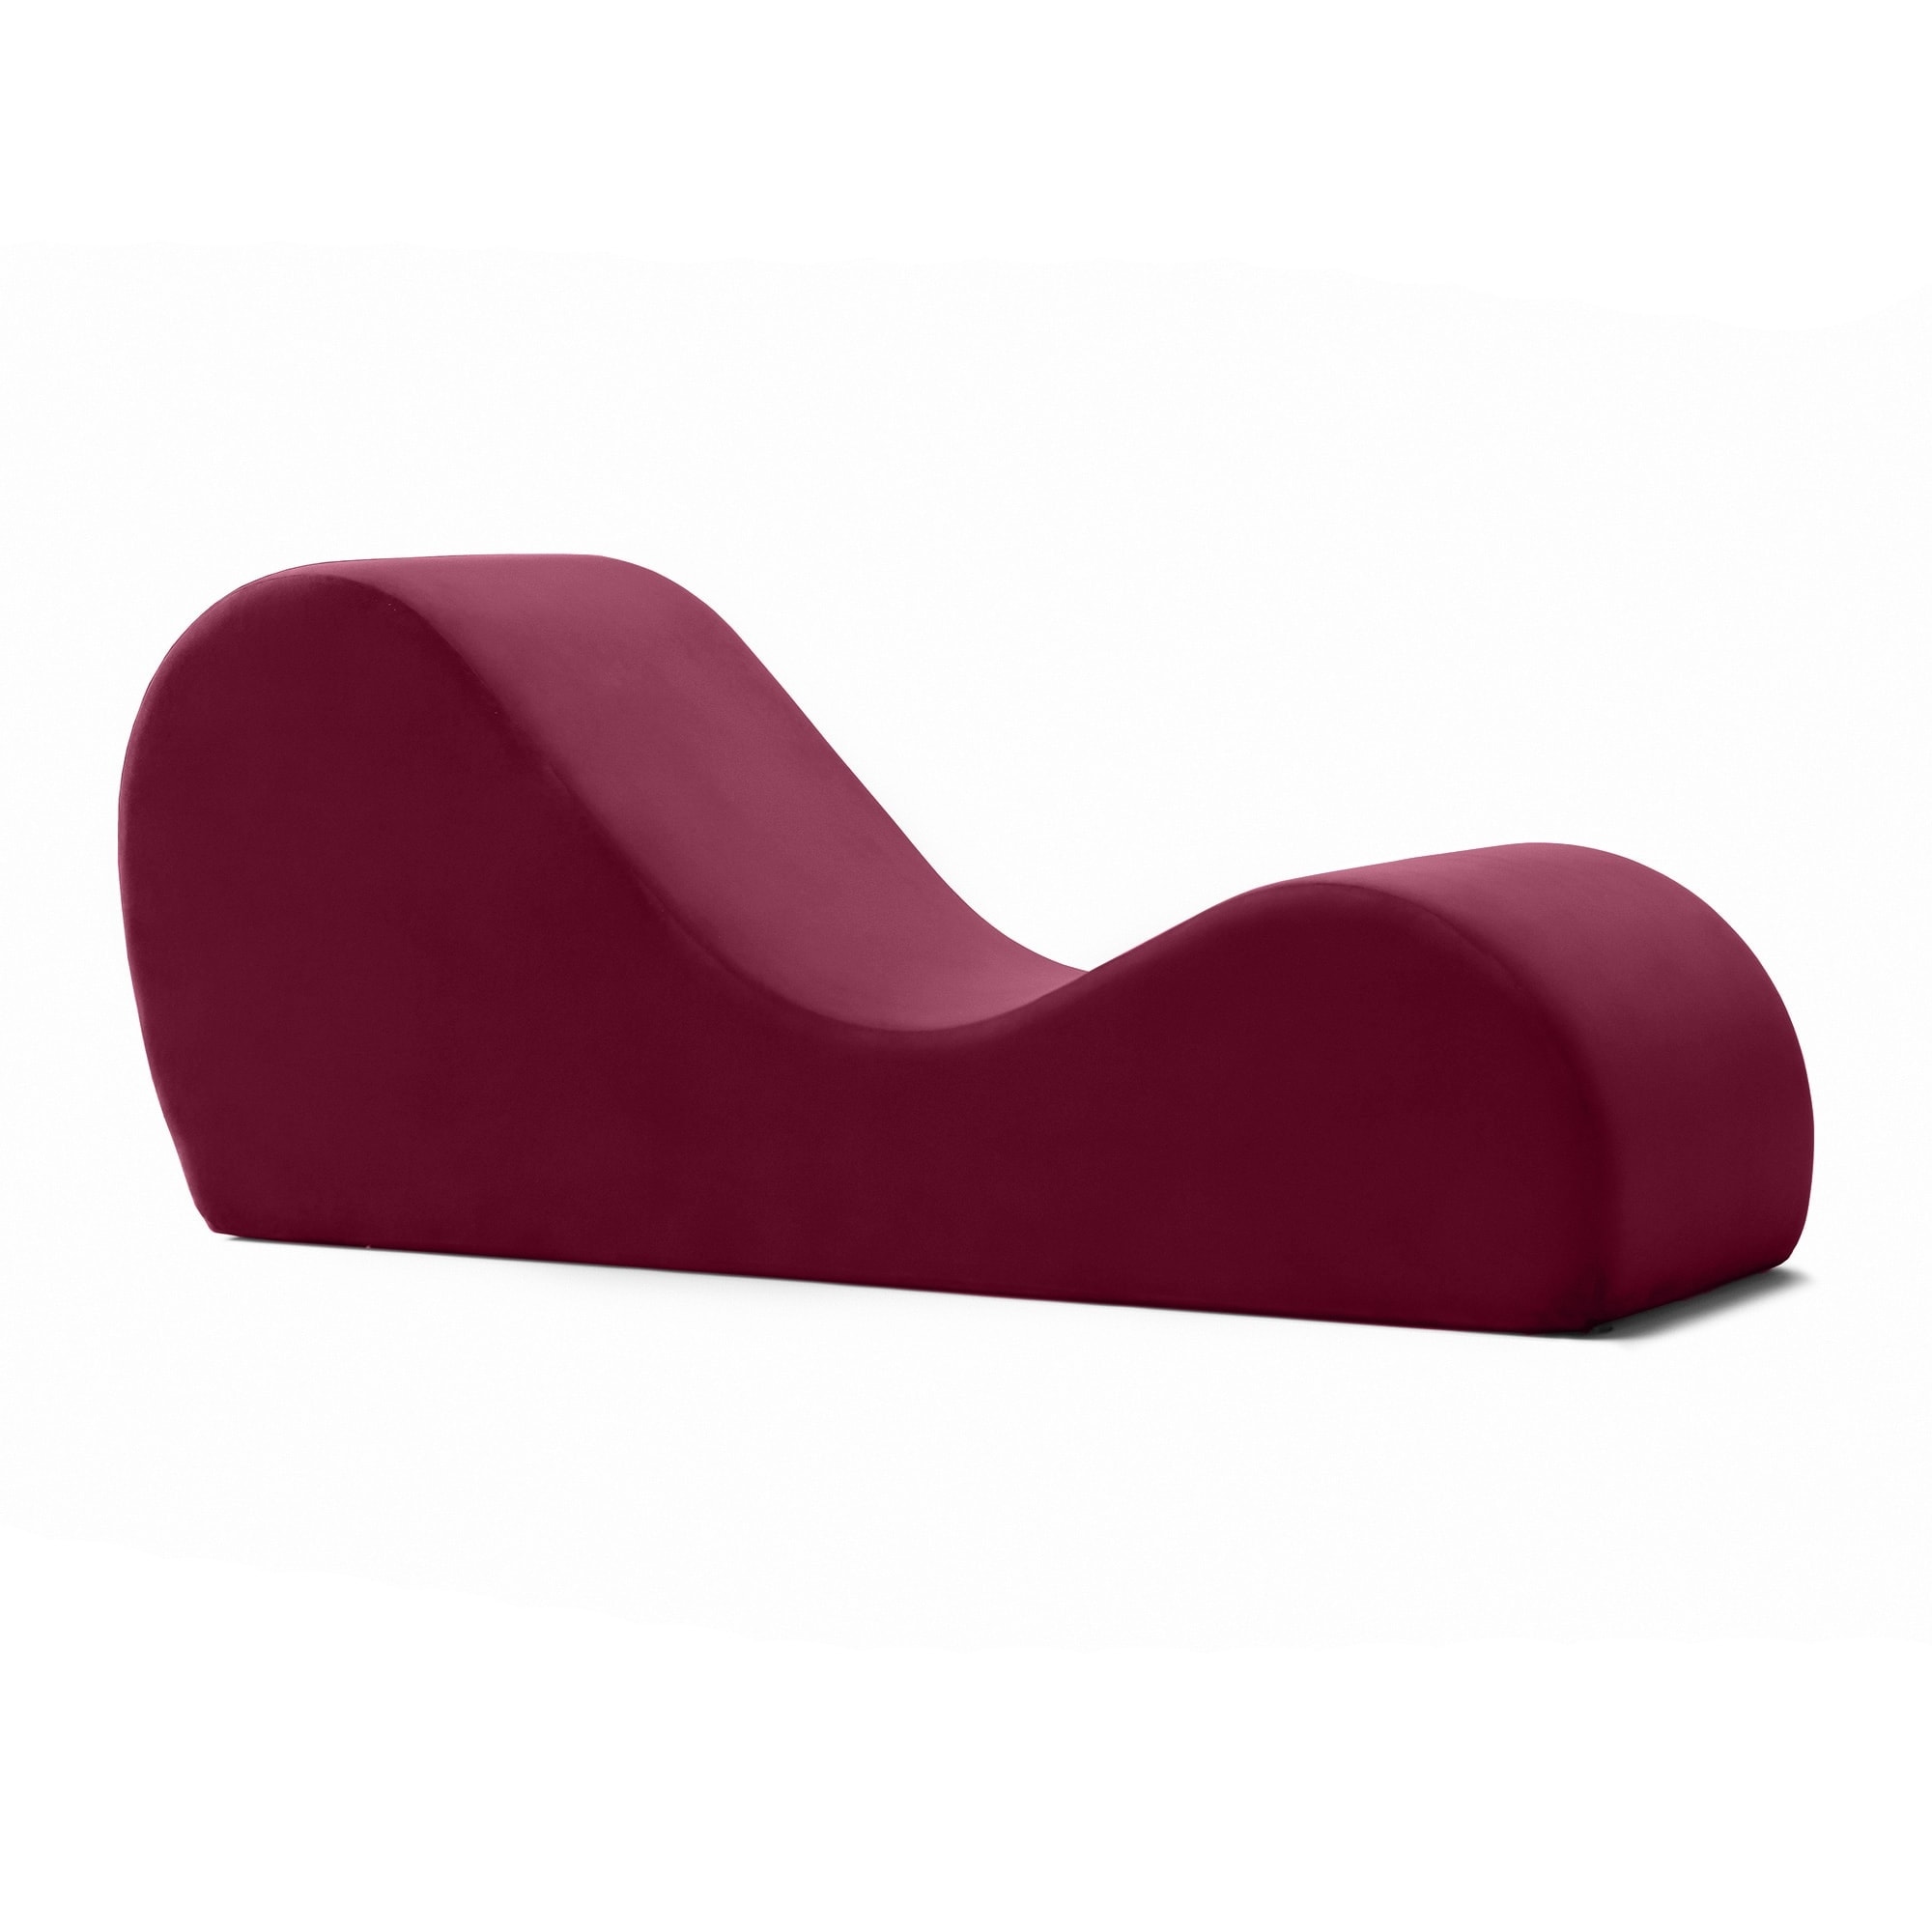 Avana Yoga Chaise Lounge Chair - On Sale - Bed Bath & Beyond - 32751040